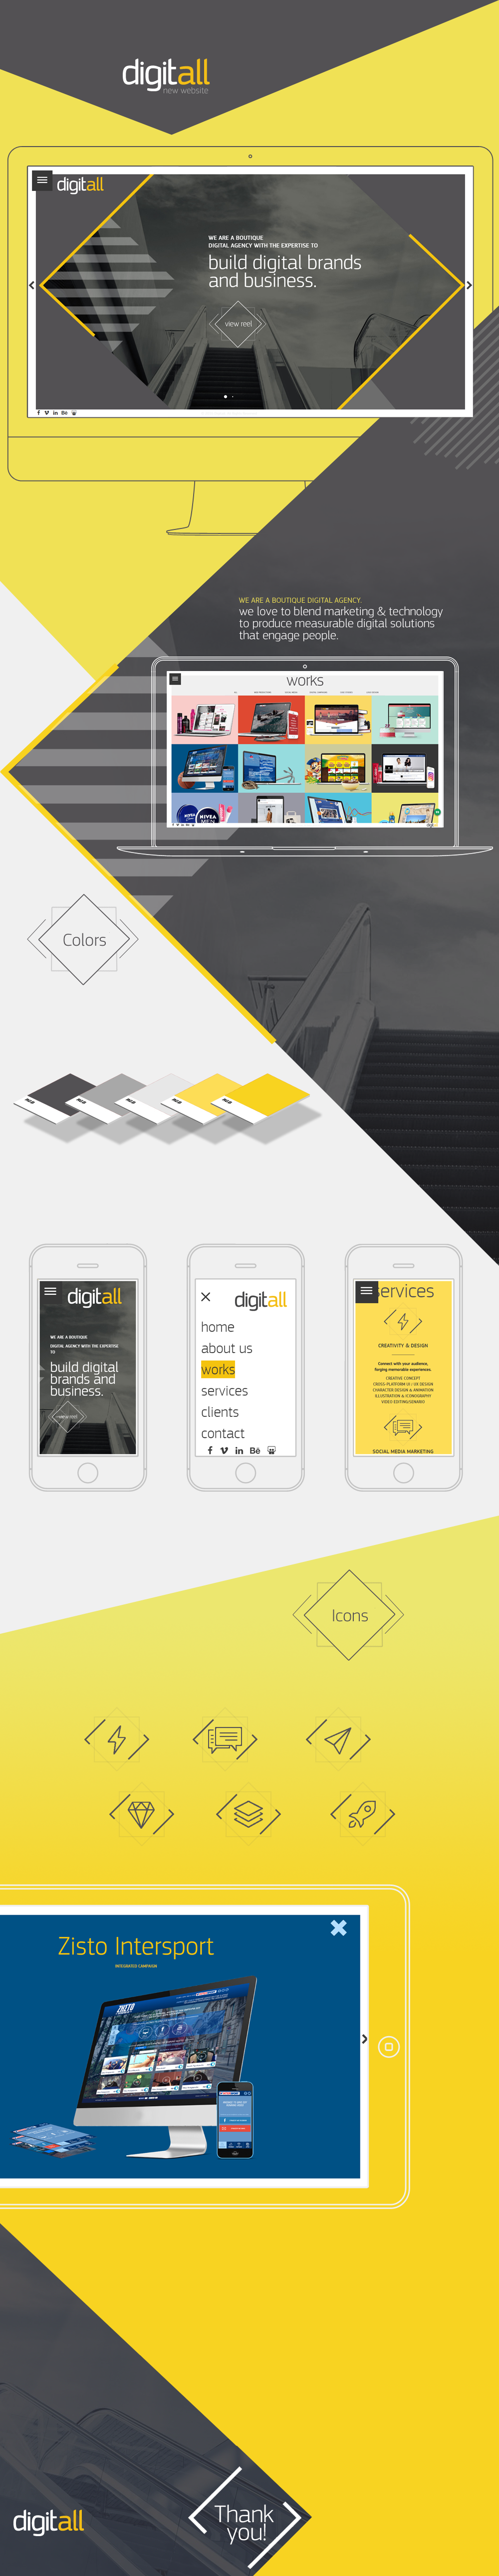 UI design digitall Responsive digital agency